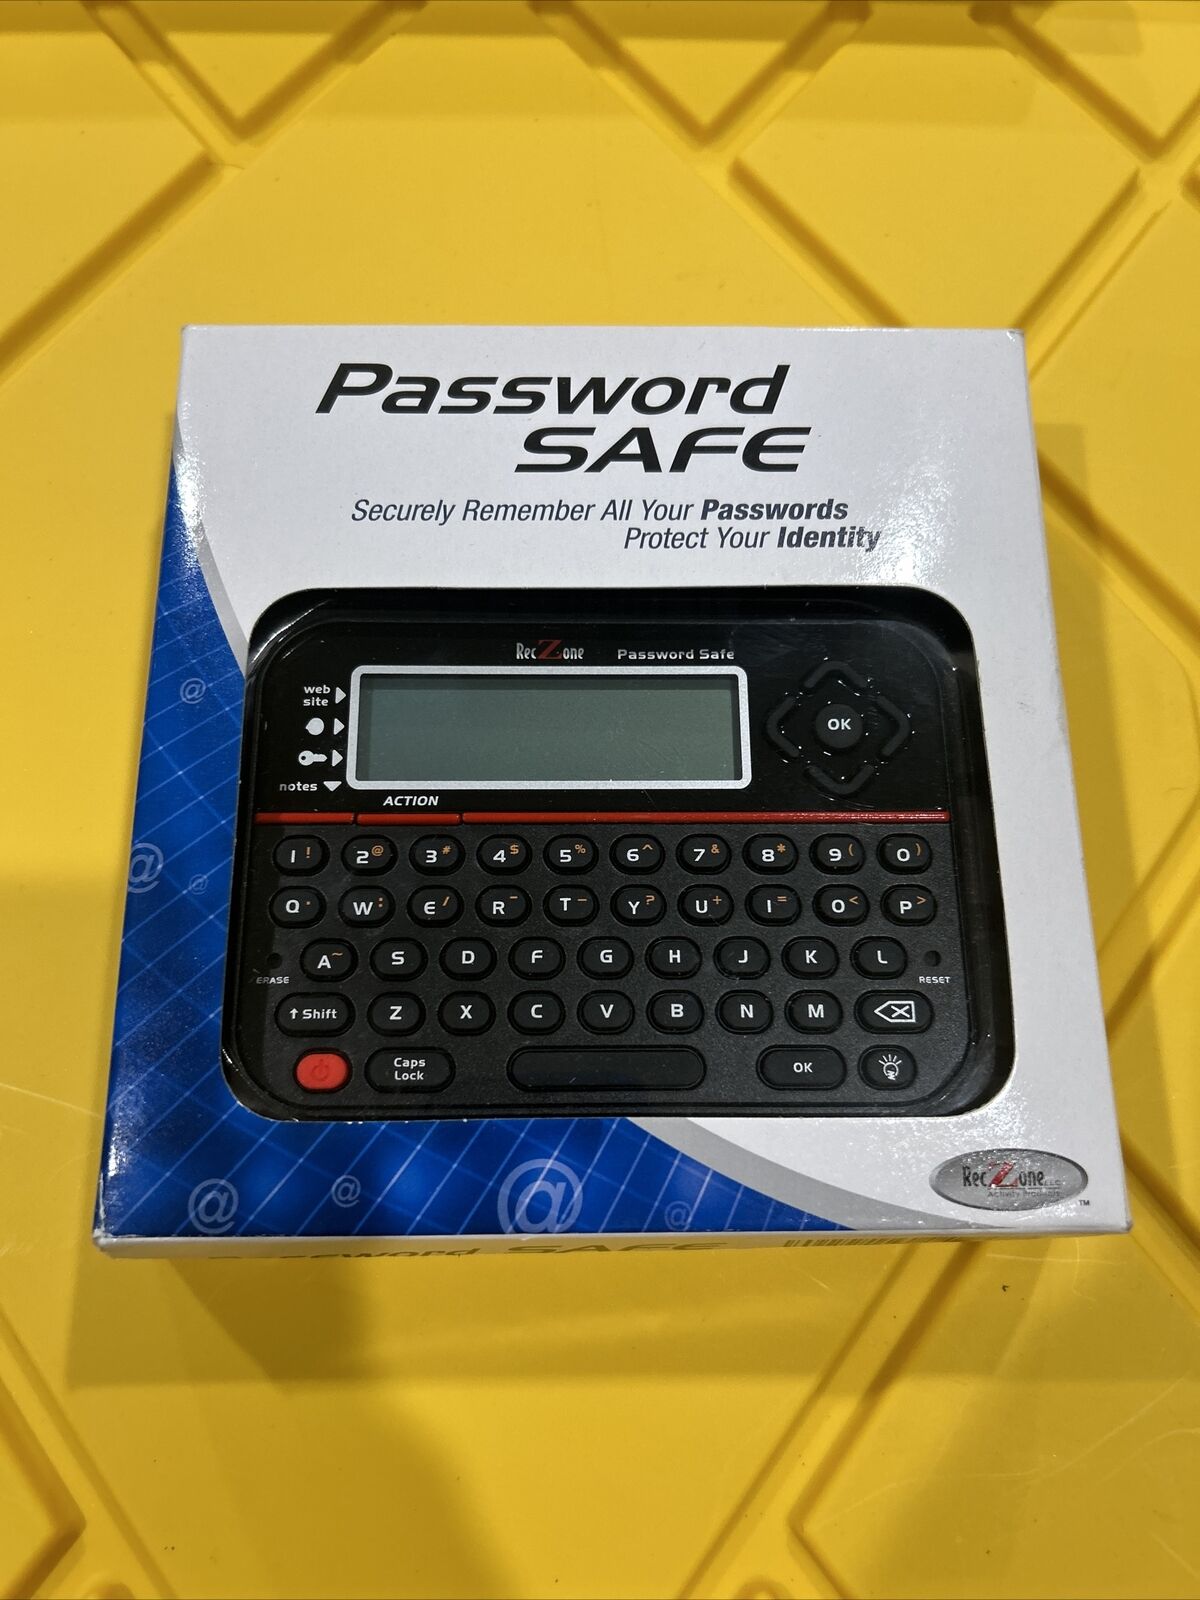 Password Safe Model 595 Backlit LCD Built-In Memory Storage RecZone IOB